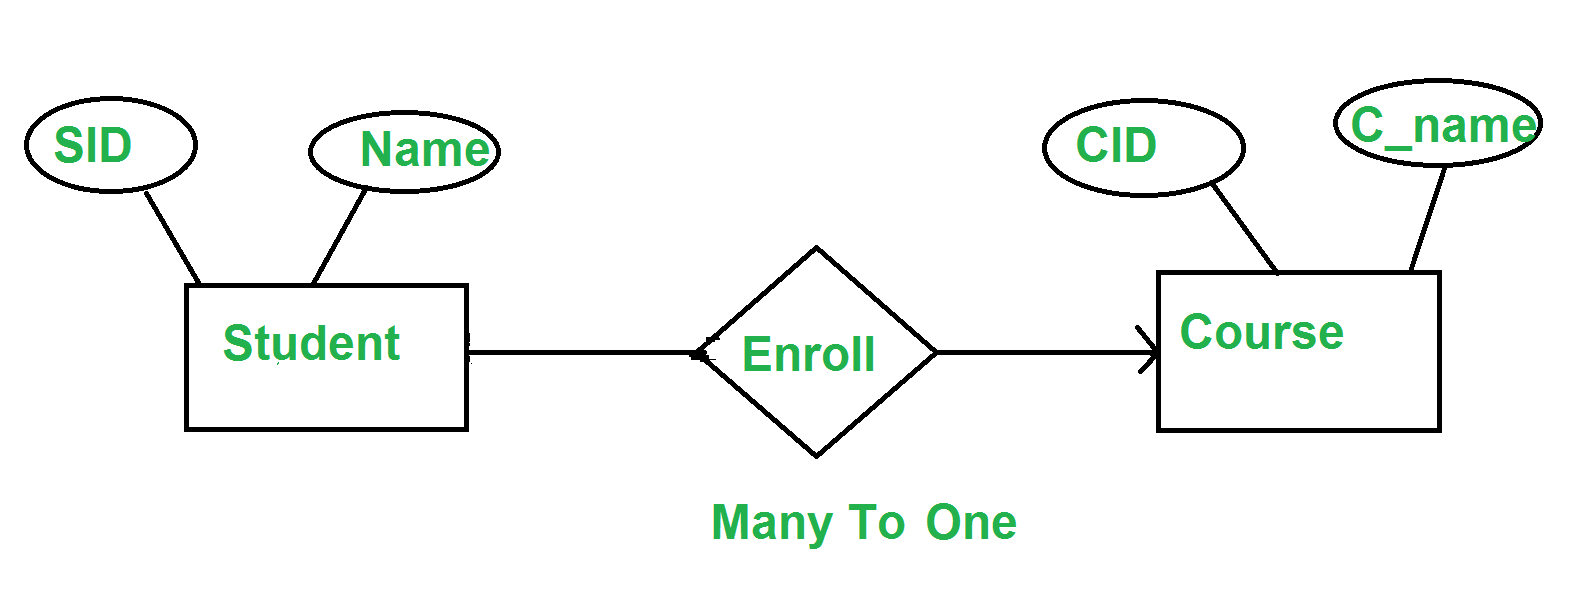 Entity Relationship Diagram Cardinality Examples 